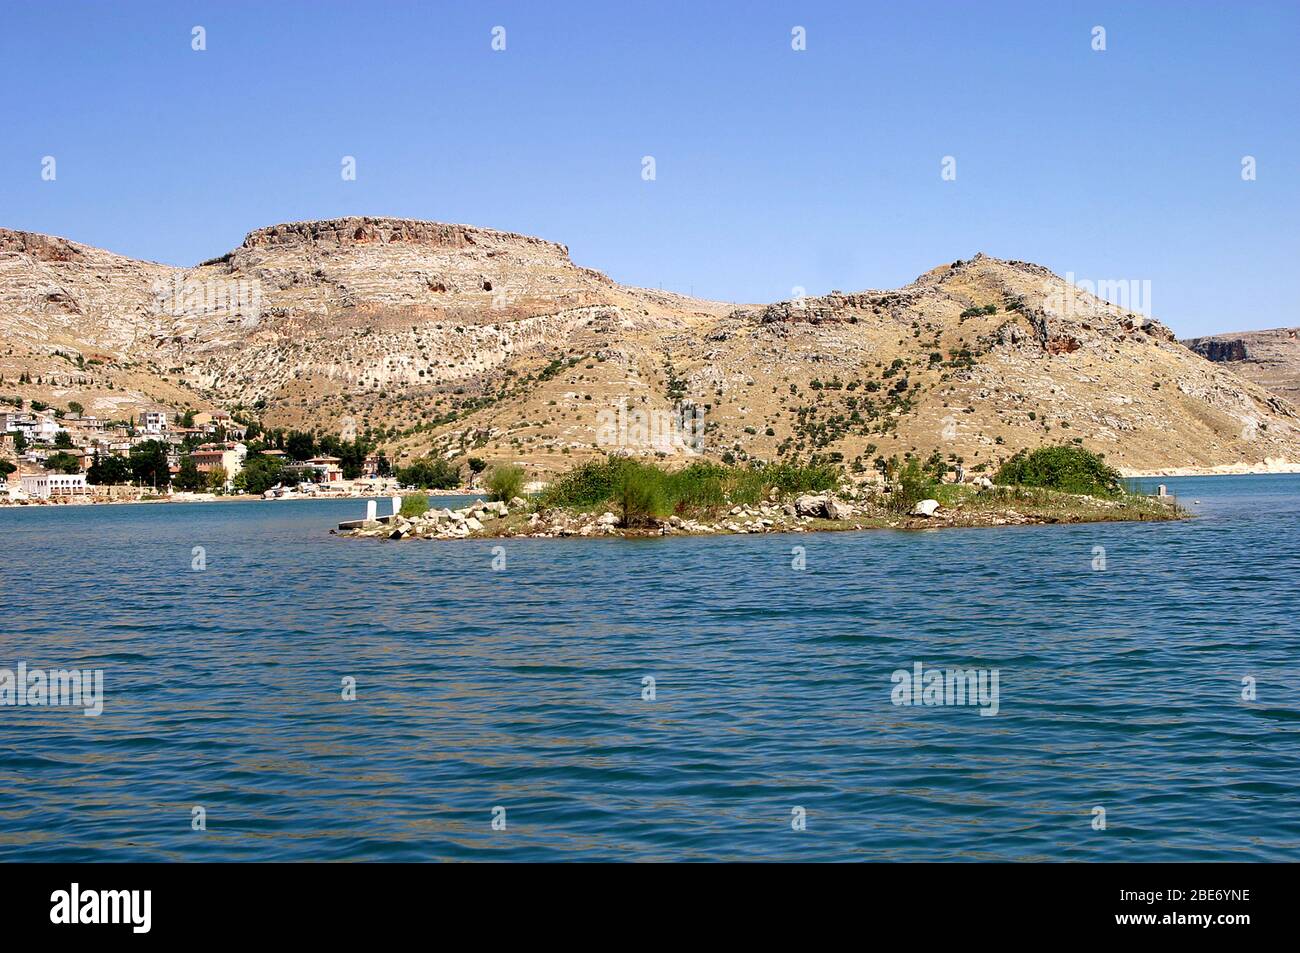 Sunken village Savasan and small cemetery island in Euphrates River (Firat), Halfeti, Gaziantep, Turkey. Stock Photo